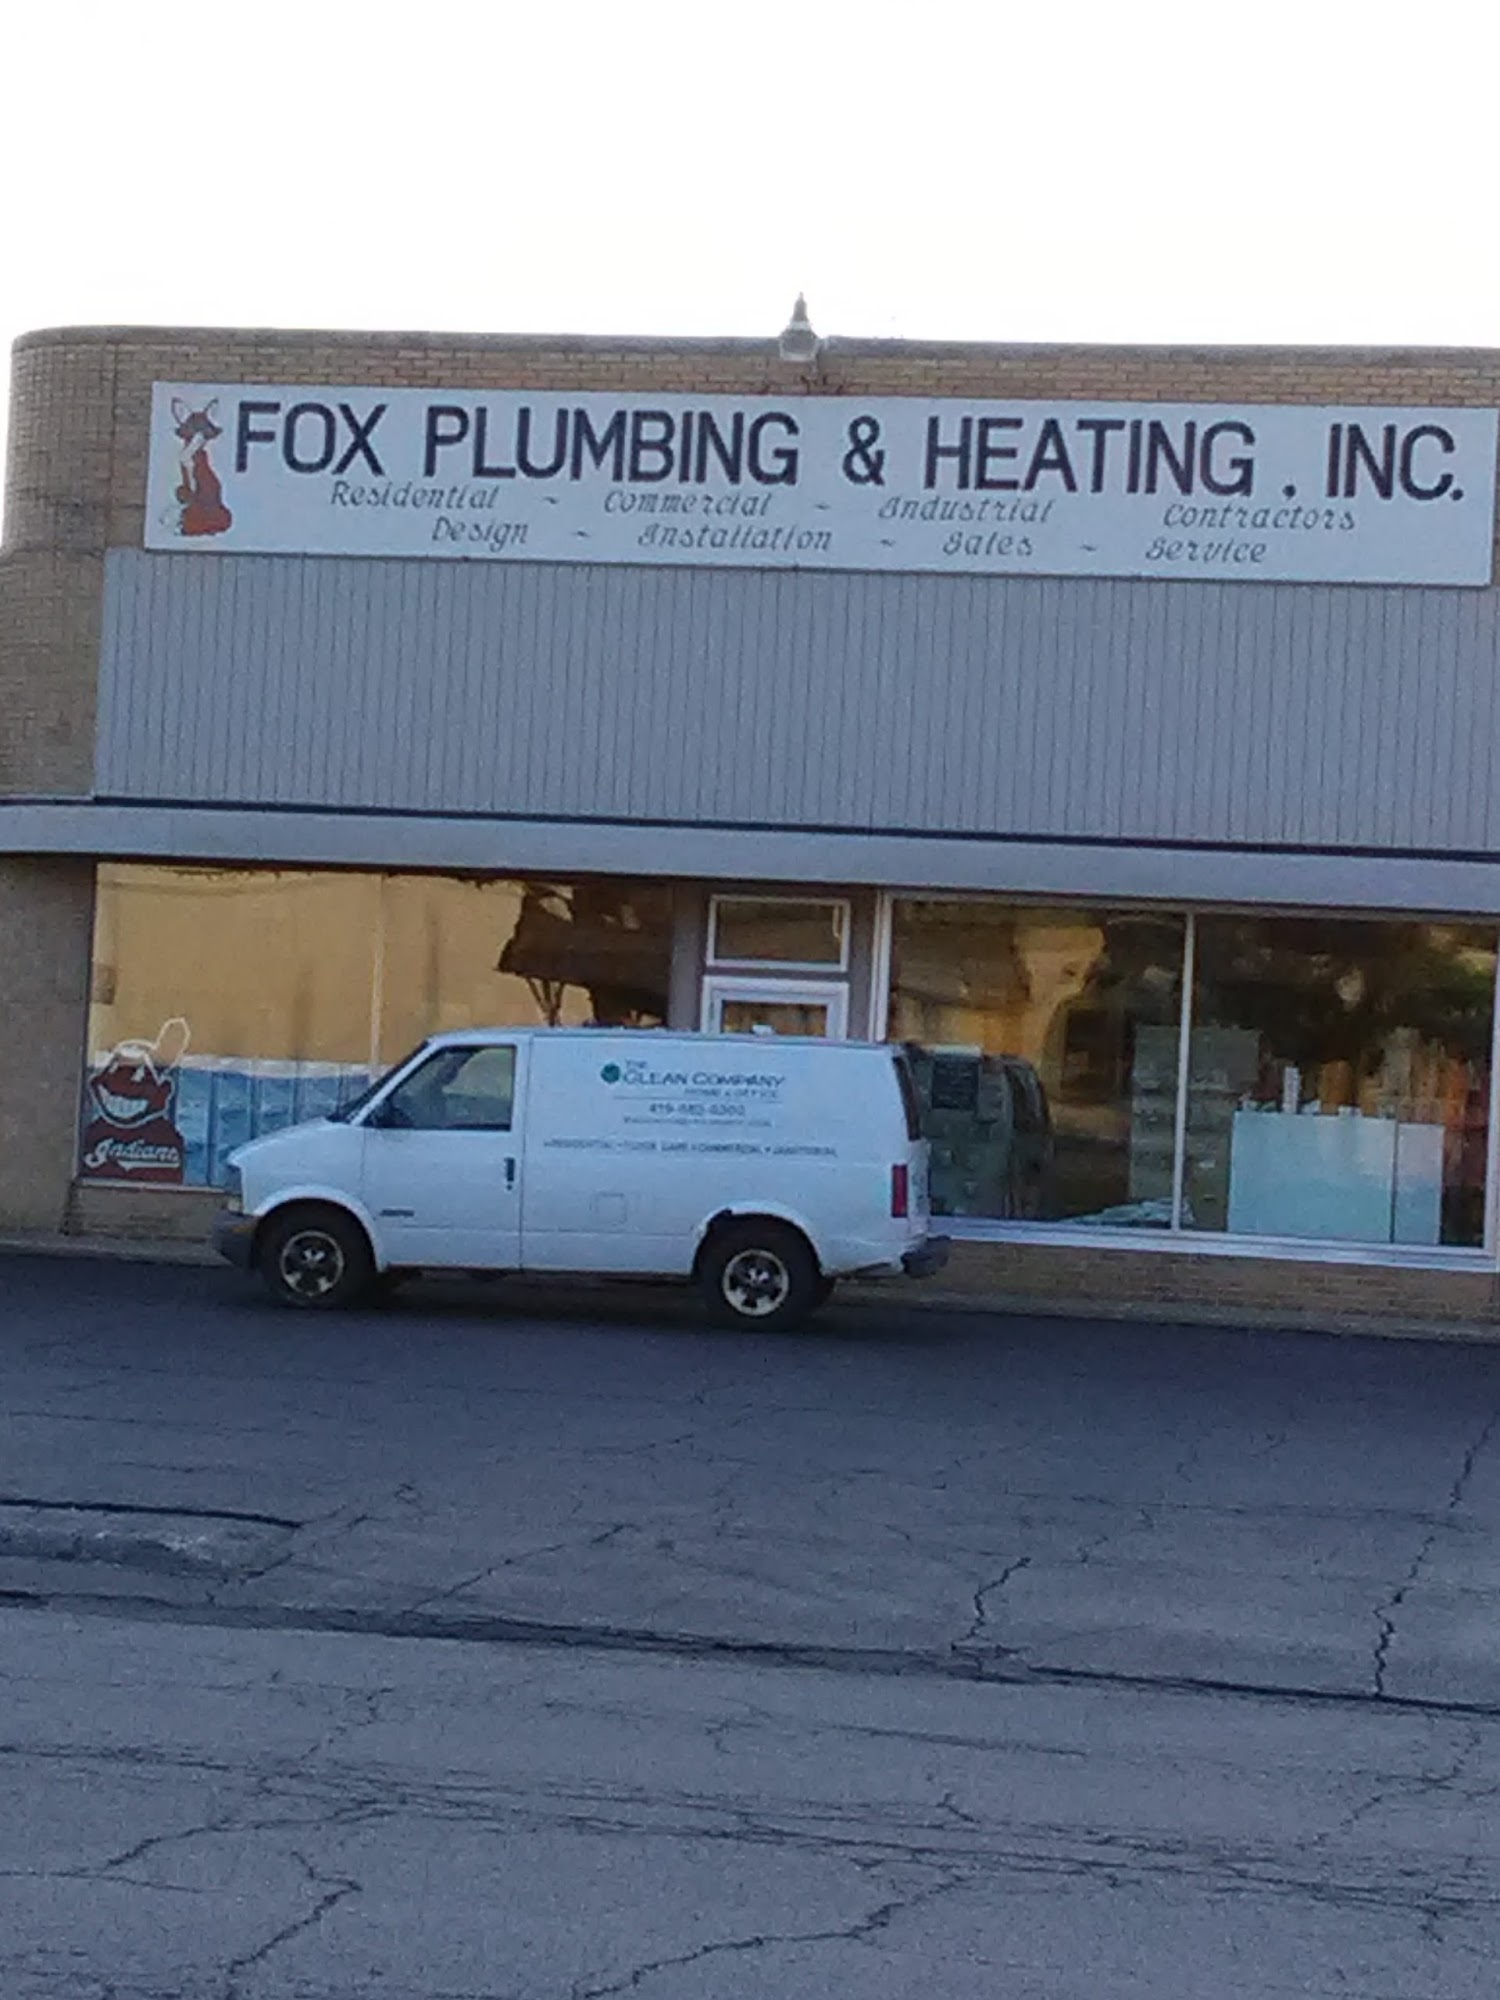 Fox Plumbing & Heating Inc 126 N Washington St, Galion Ohio 44833